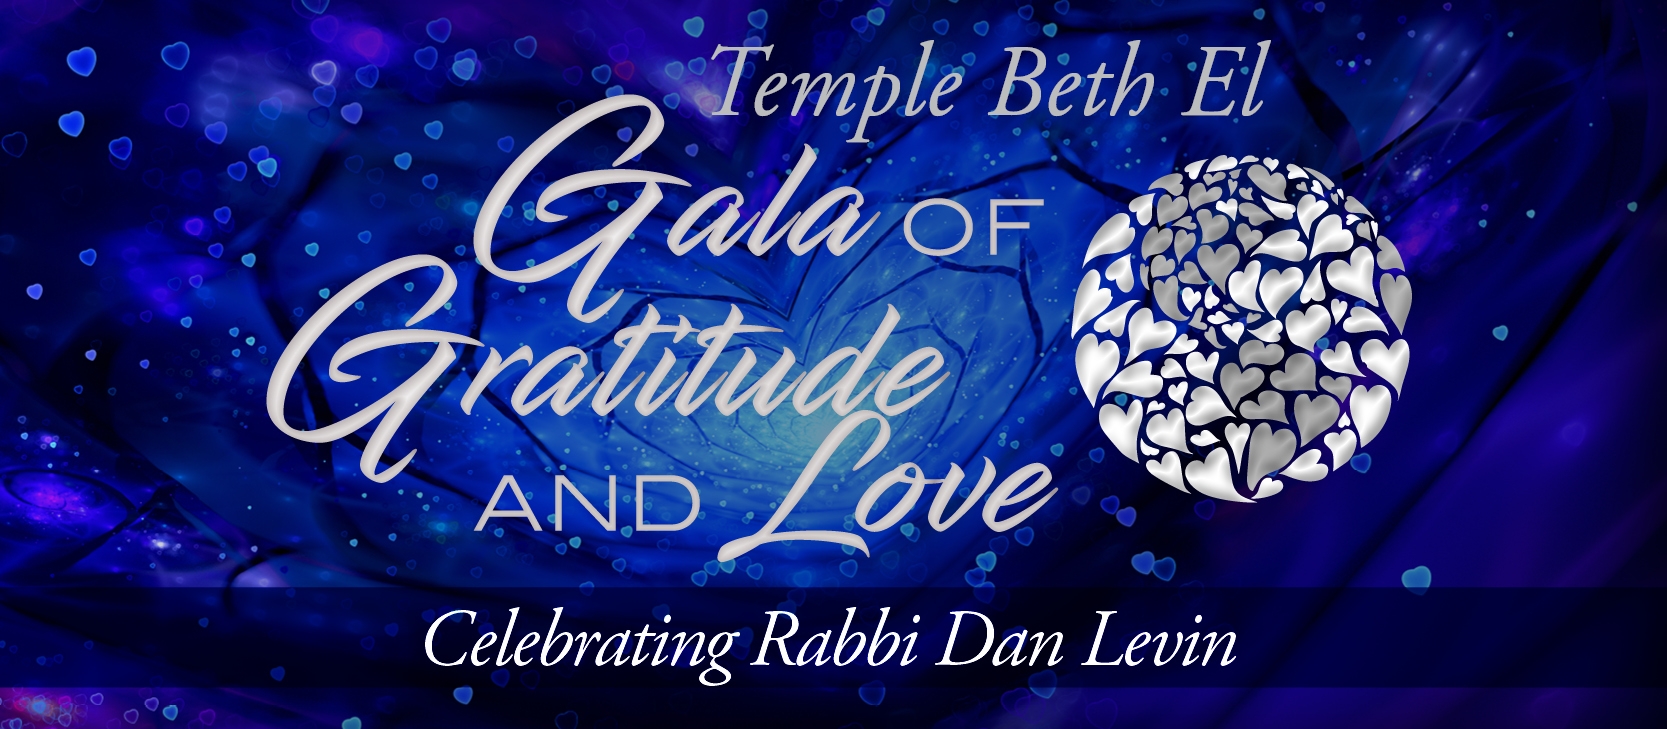 Gala of Gratitude and Love Celebrating Rabbi Dan Levin event graphic for Temple Beth El of Boca Raton, 2022